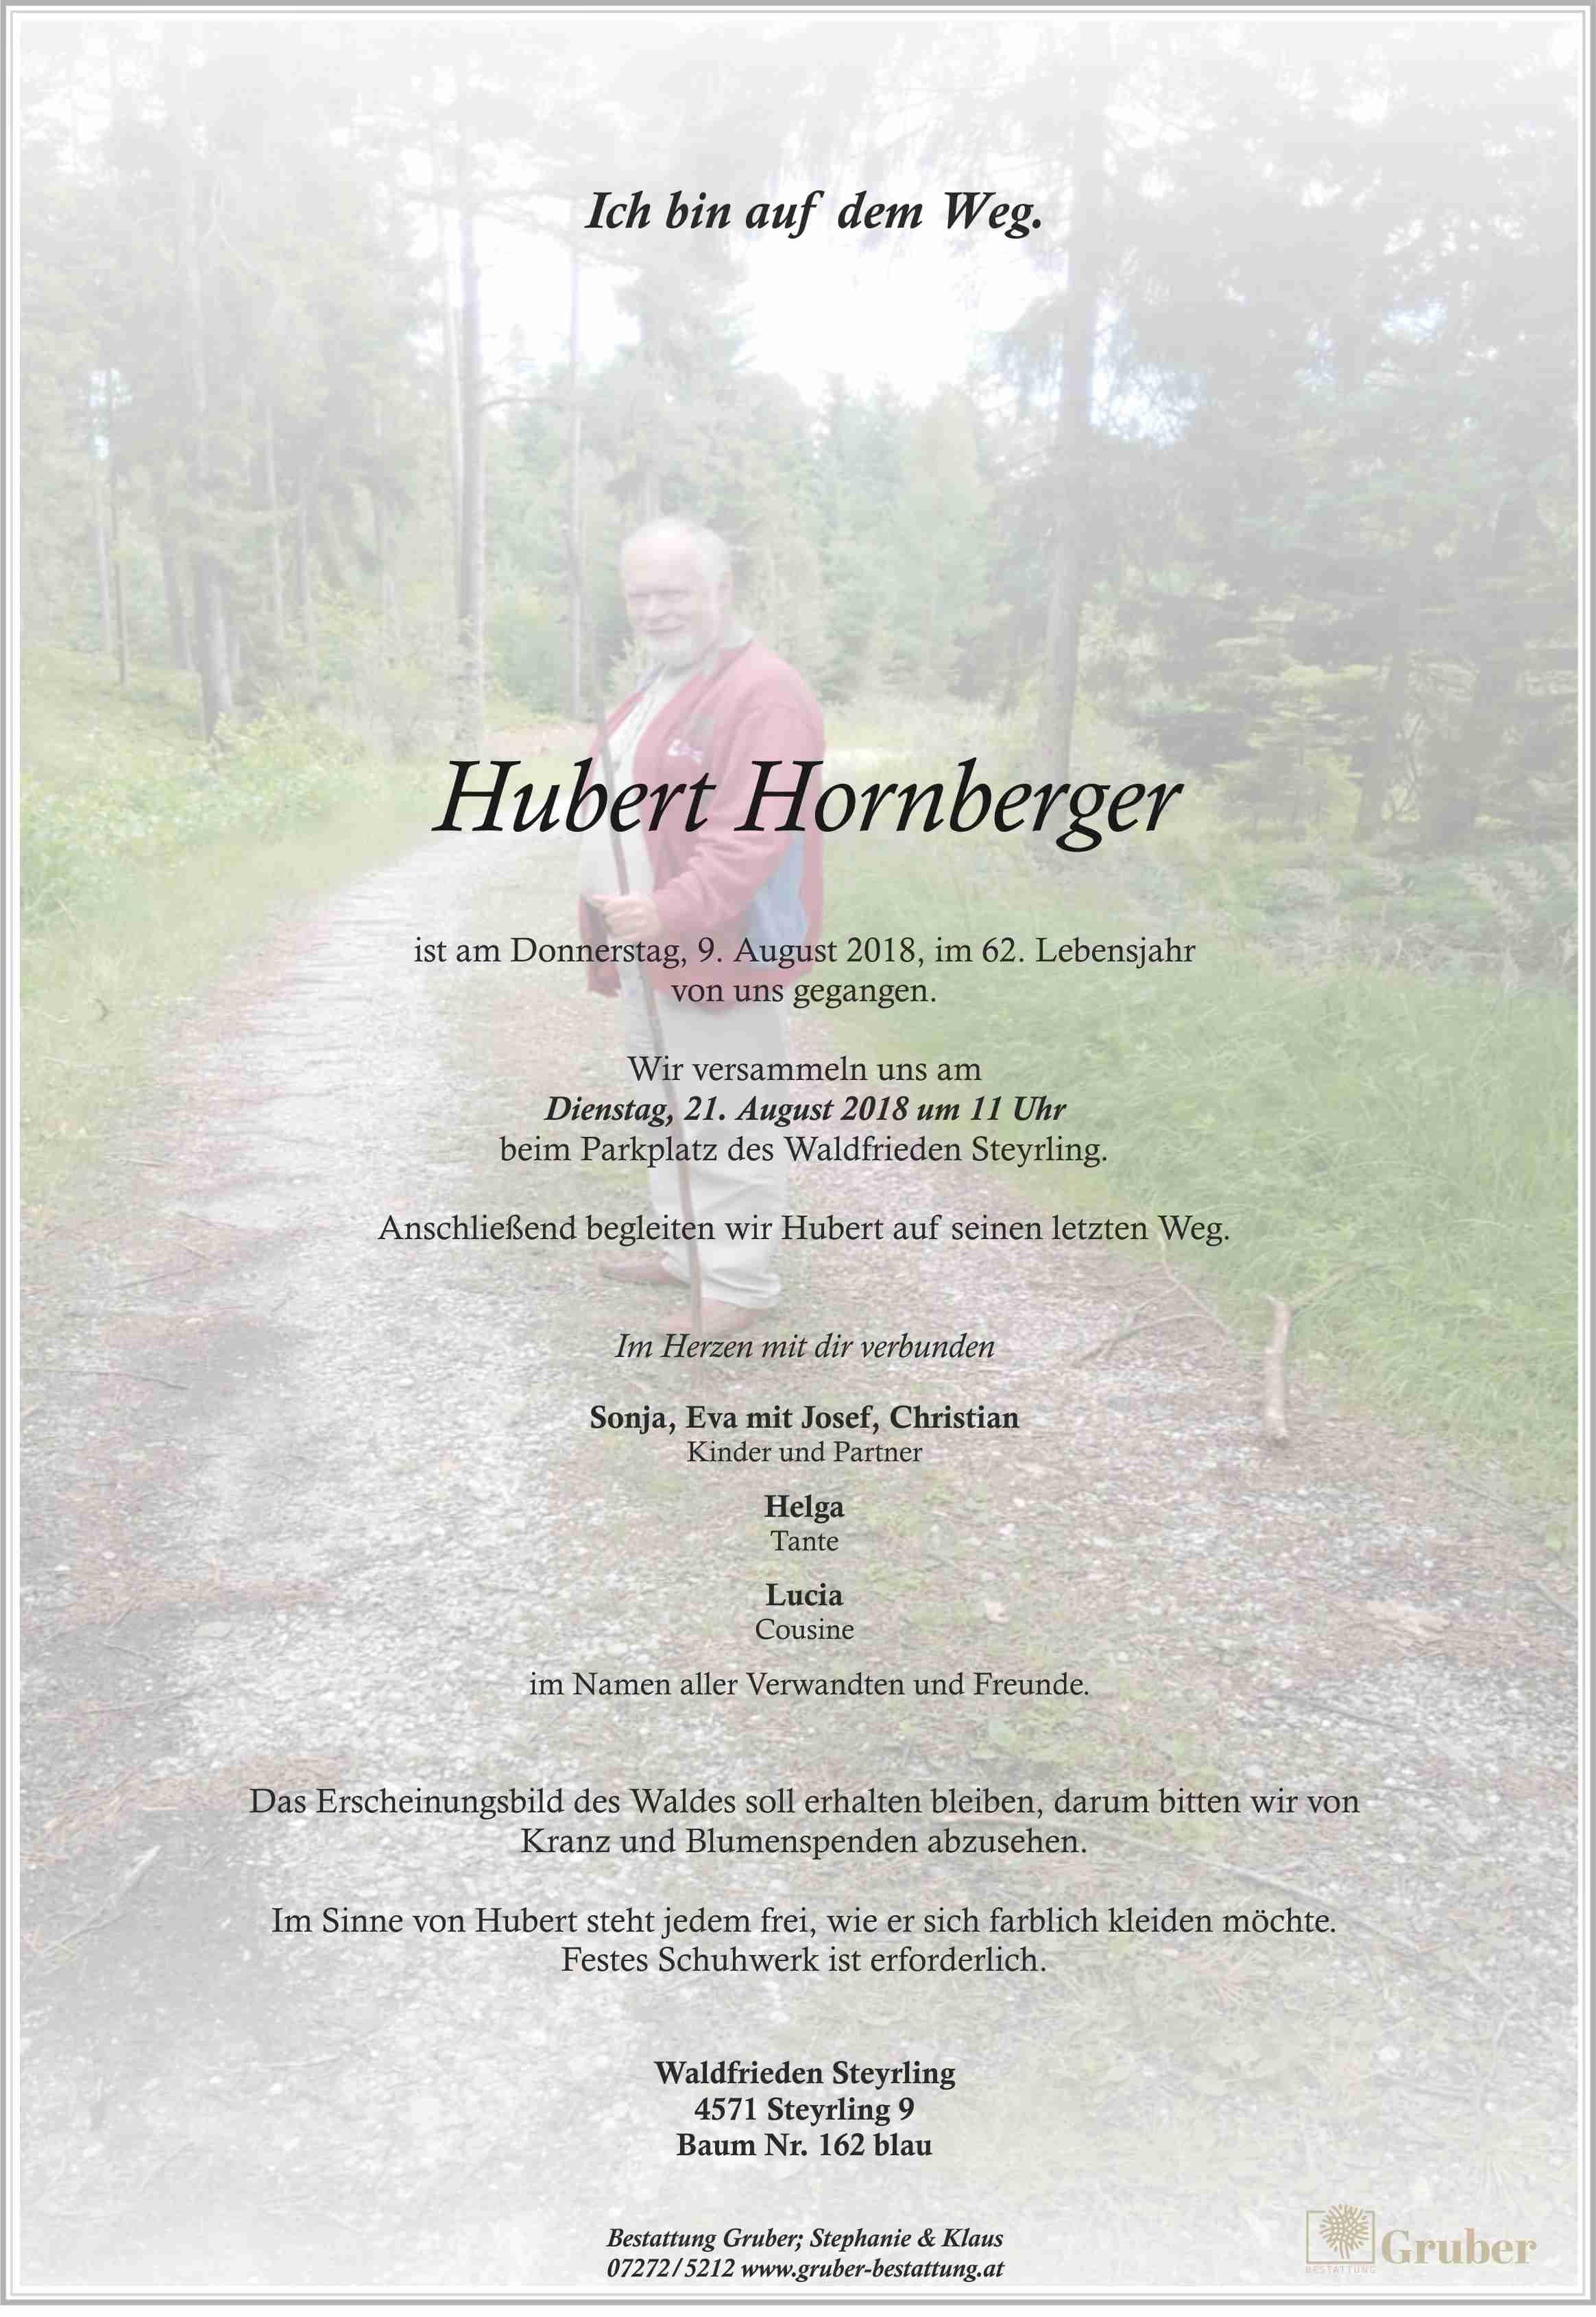 Hubert Hornberger (Marchtrenk)